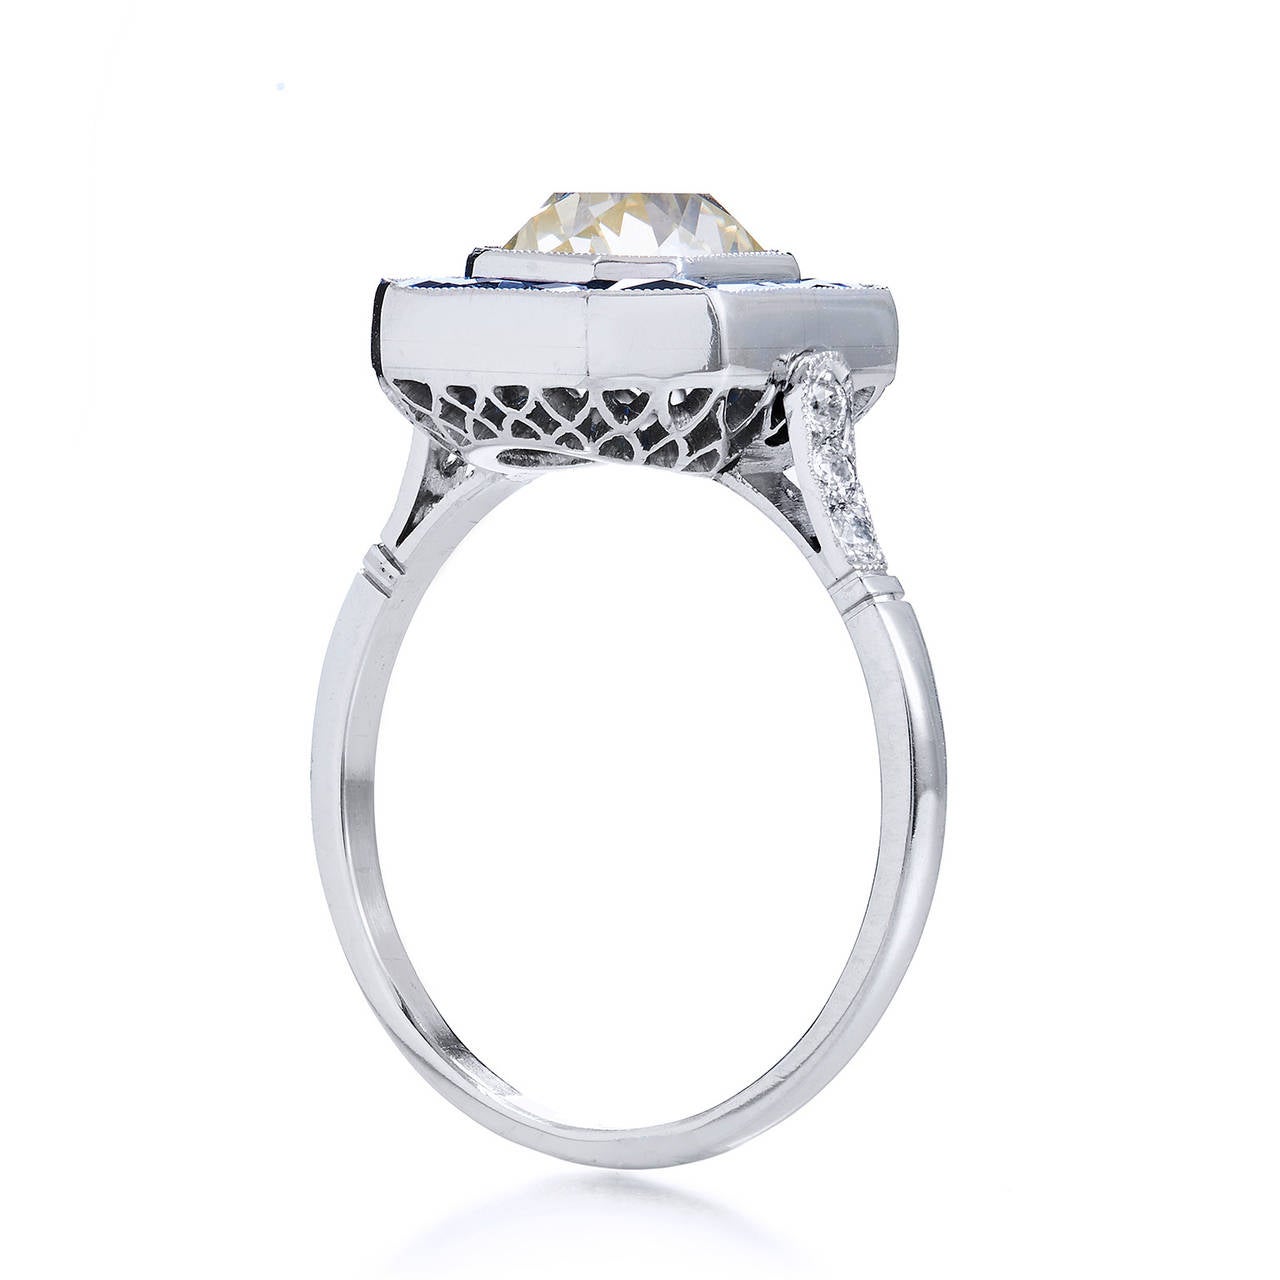 Women's 1.63 Carat Diamond and SapphireTarget Ring